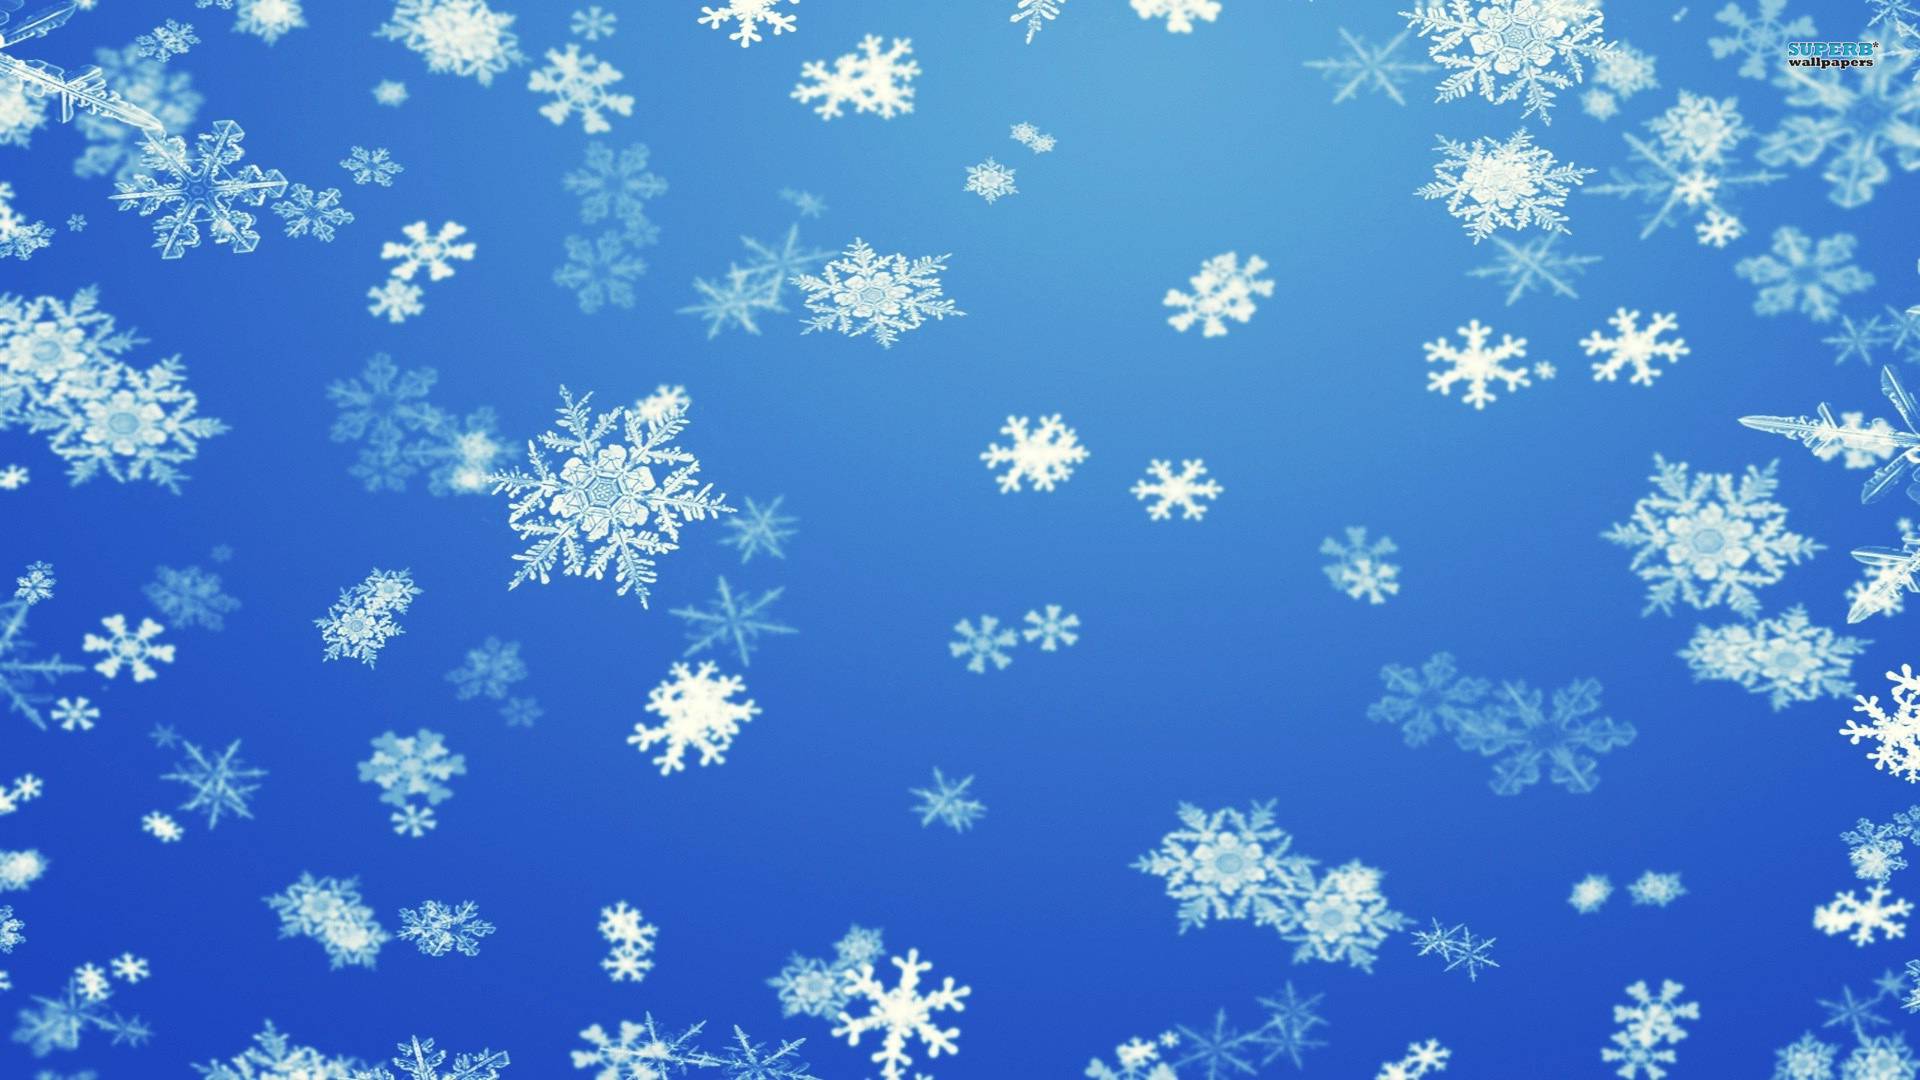 Snowflake Backgrounds For Desktop - Wallpaper Cave